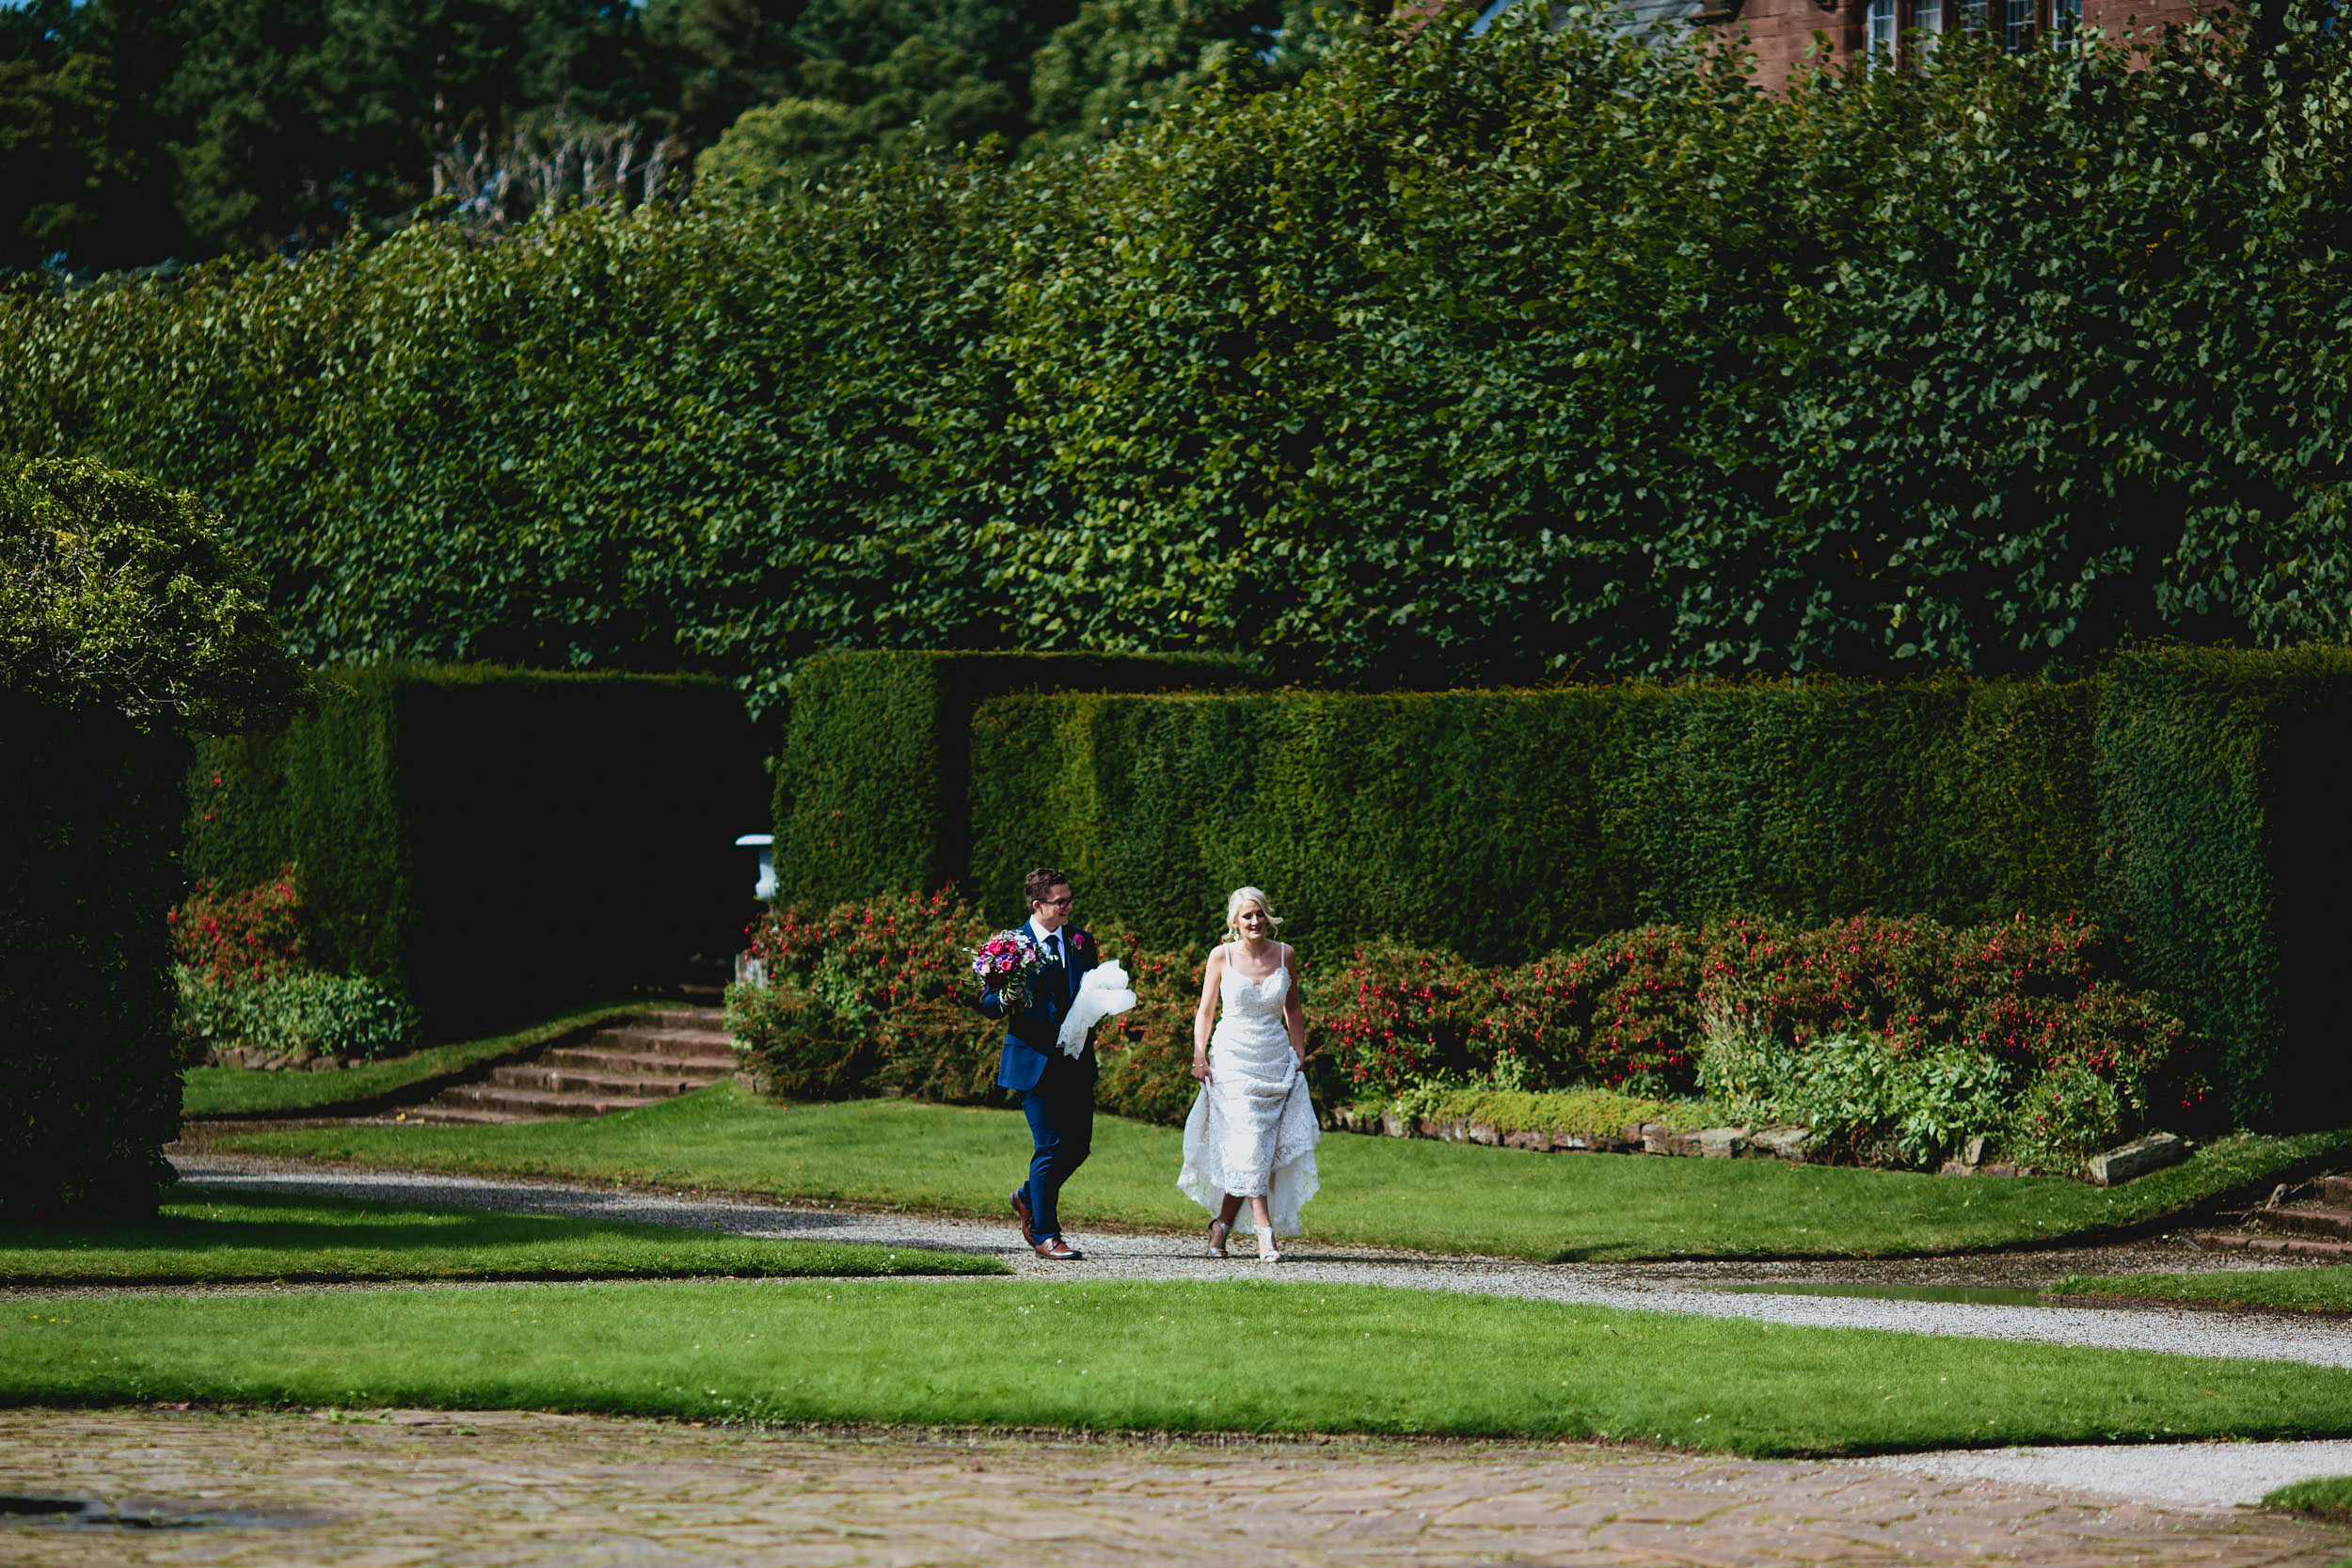 Bride and groom stroll through the gardens at their wedding venue